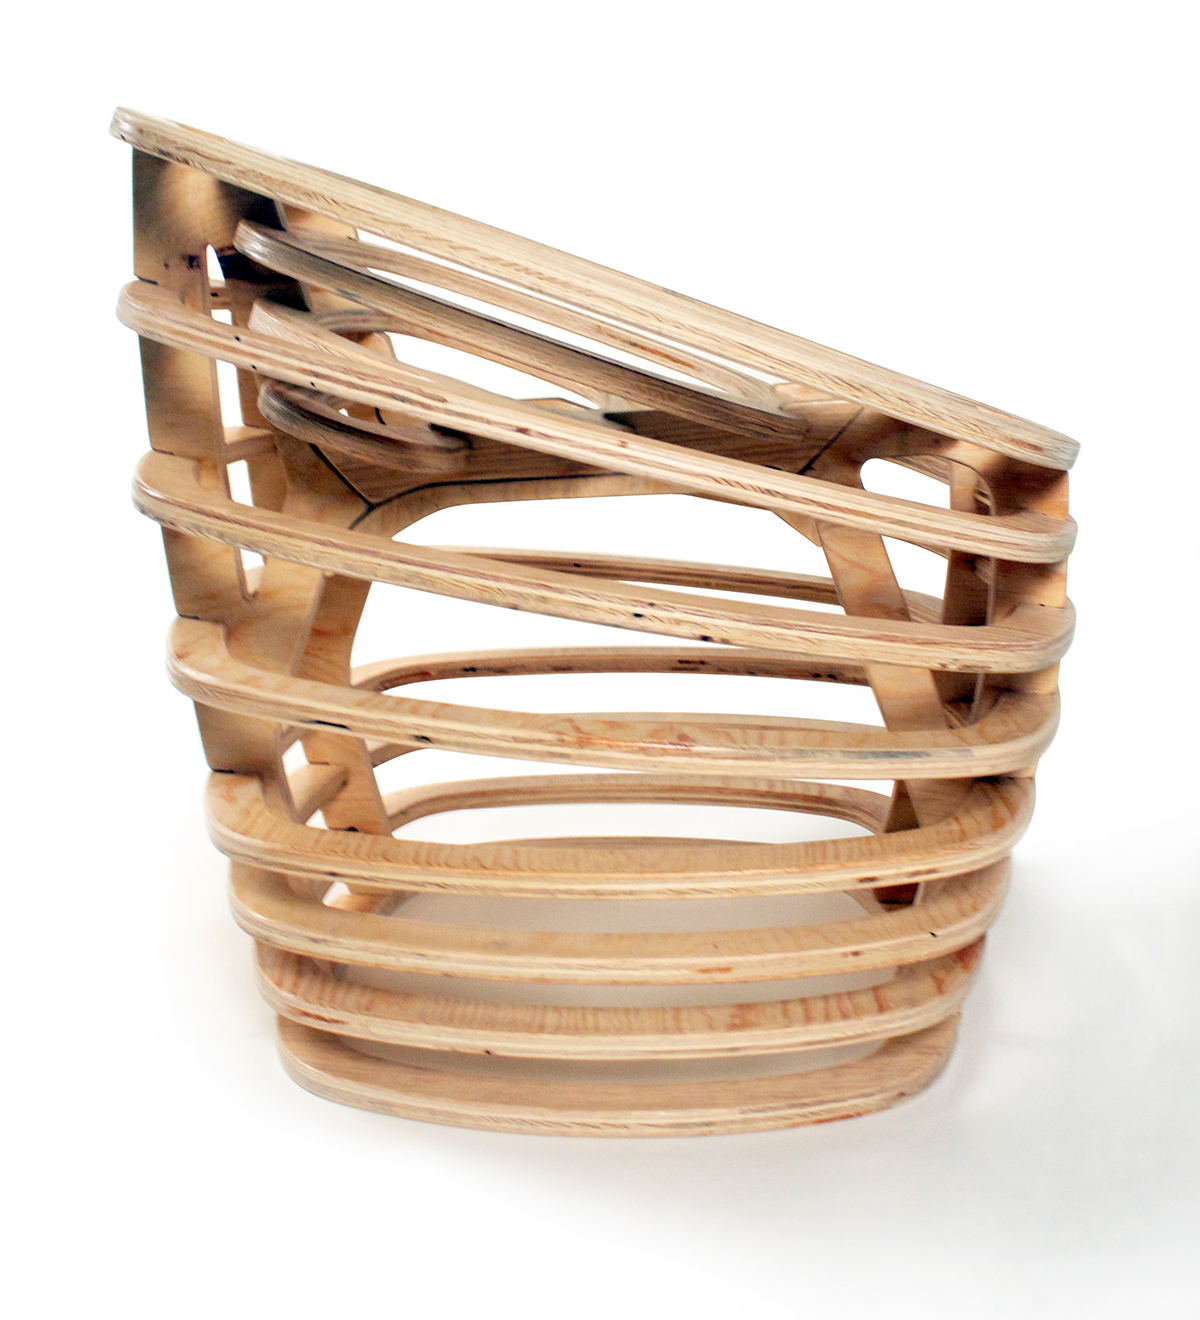 plywood concept chair wood cnc furniture mobiliario silla seat asiento madera triplay monterrey mexico